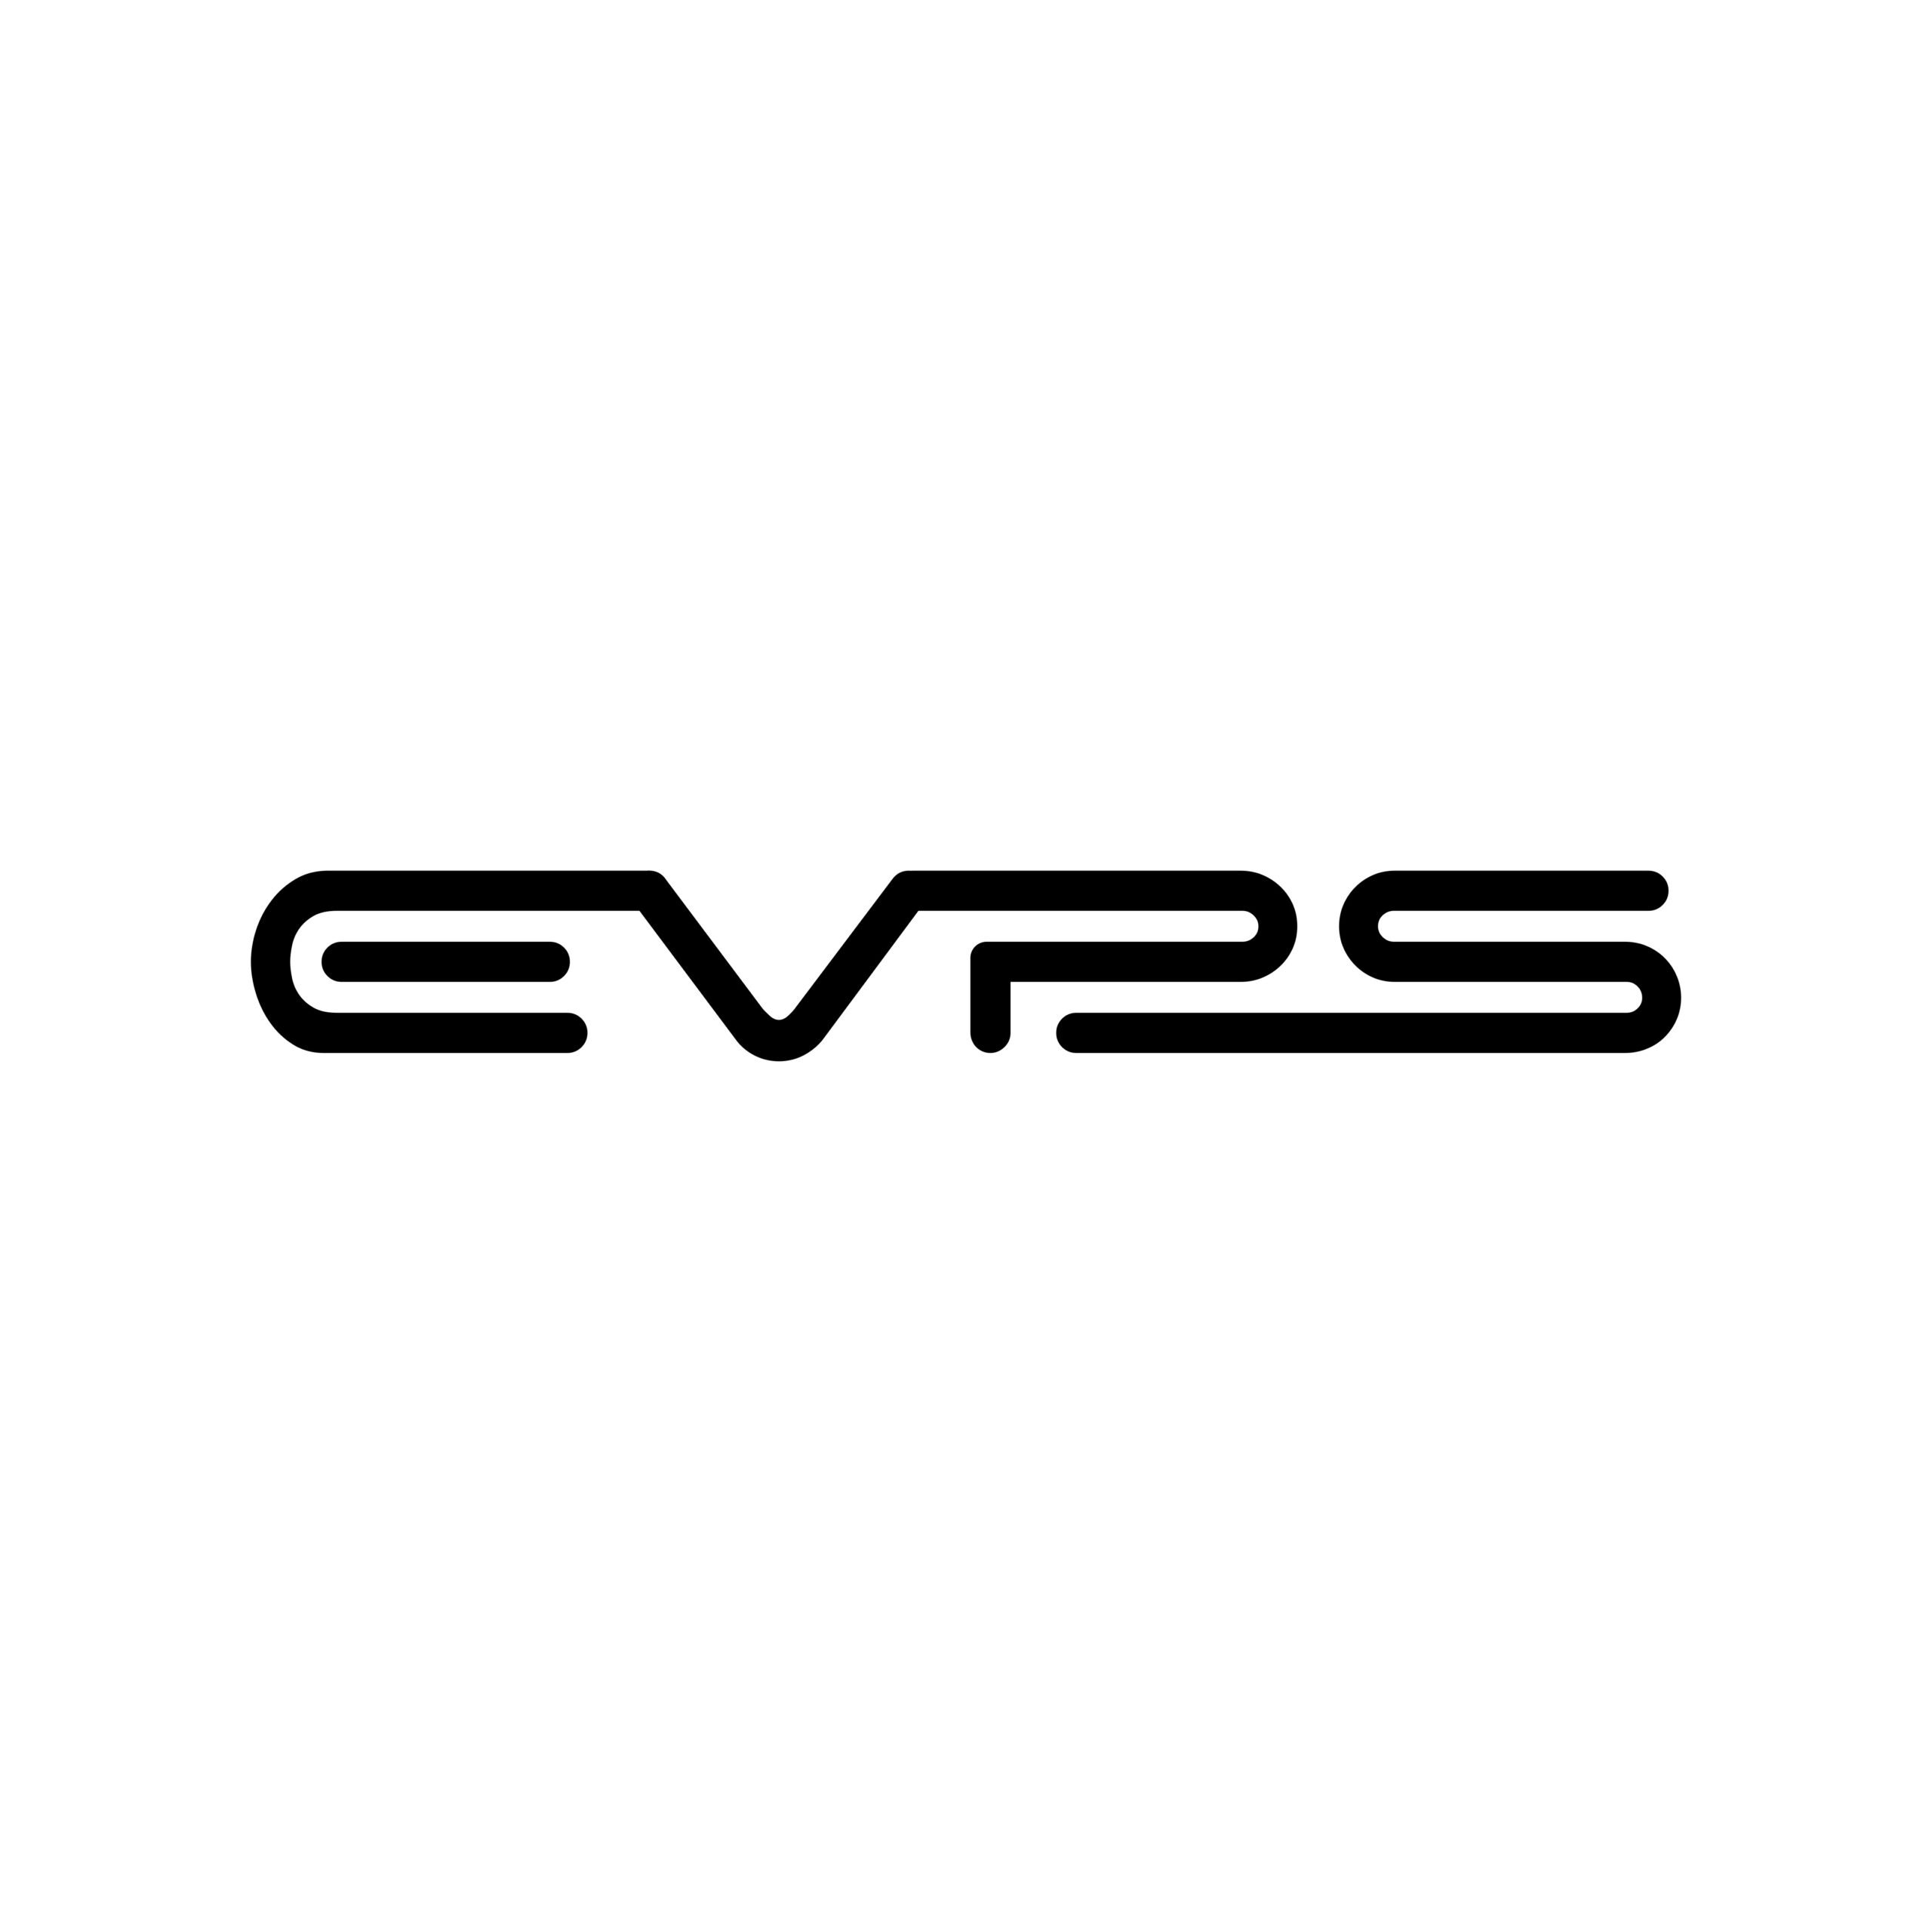 EV Parts Solutions